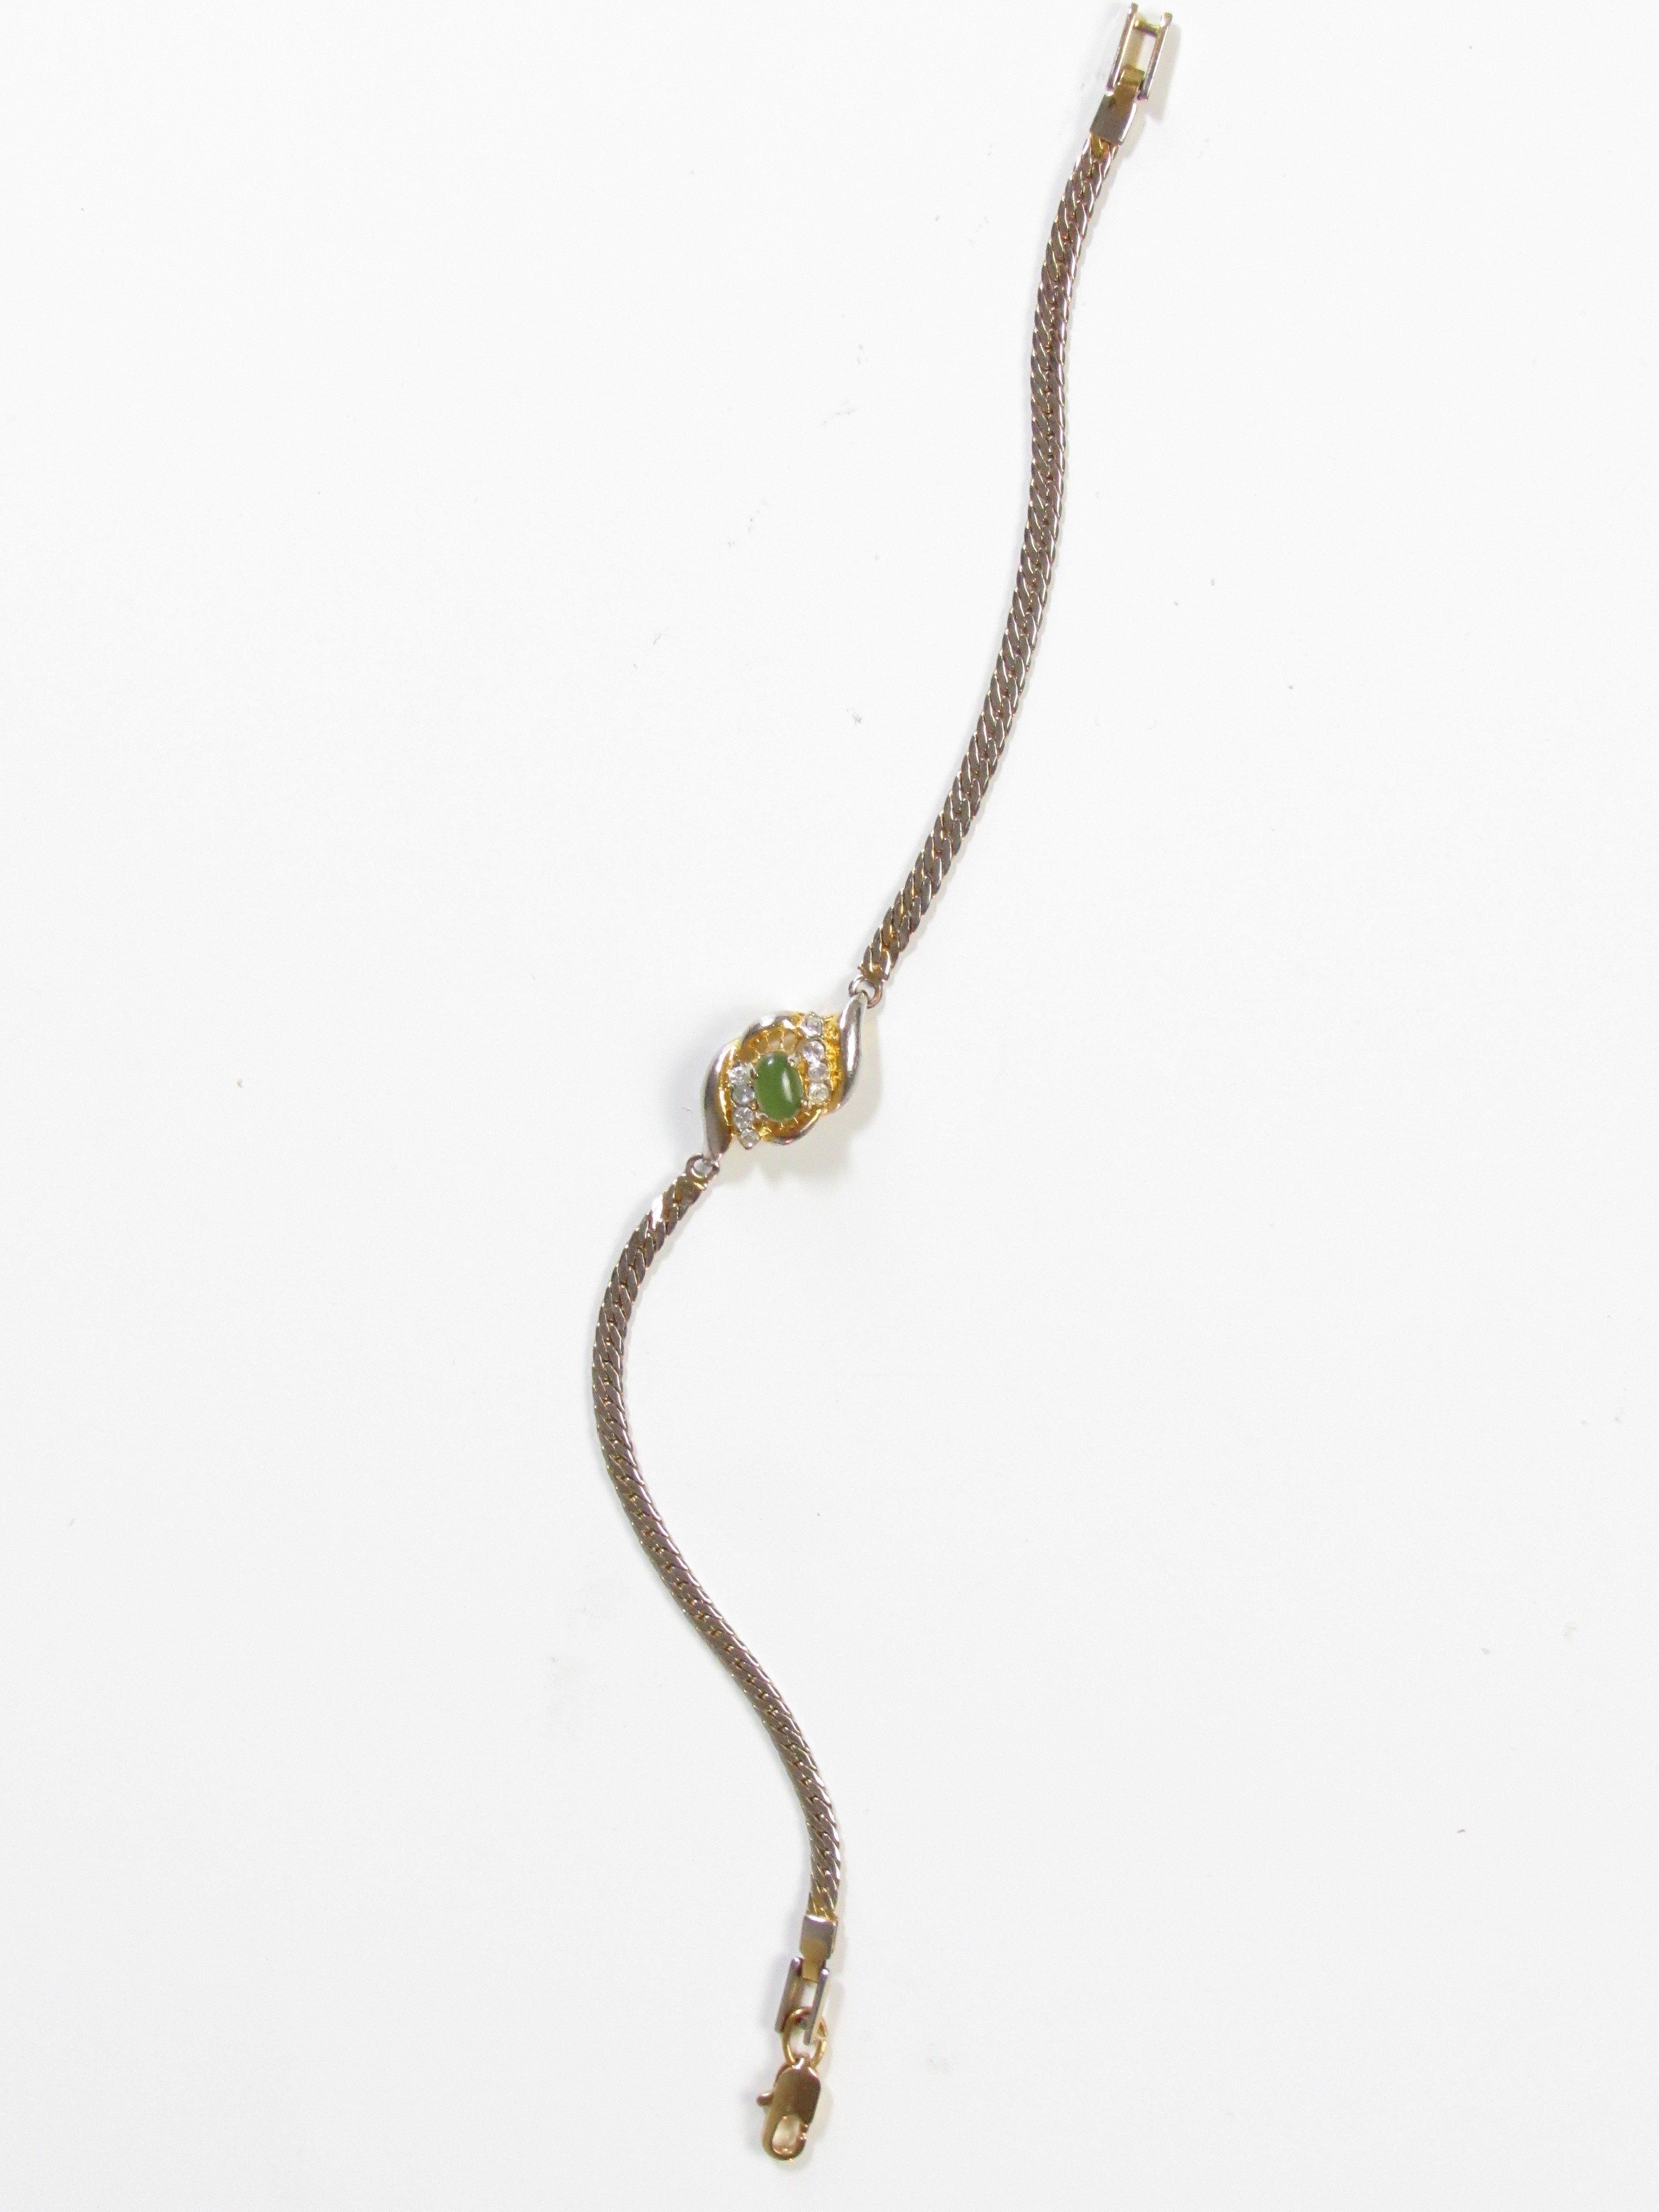 Vintage Gold Plated Bracelet with Green Jade